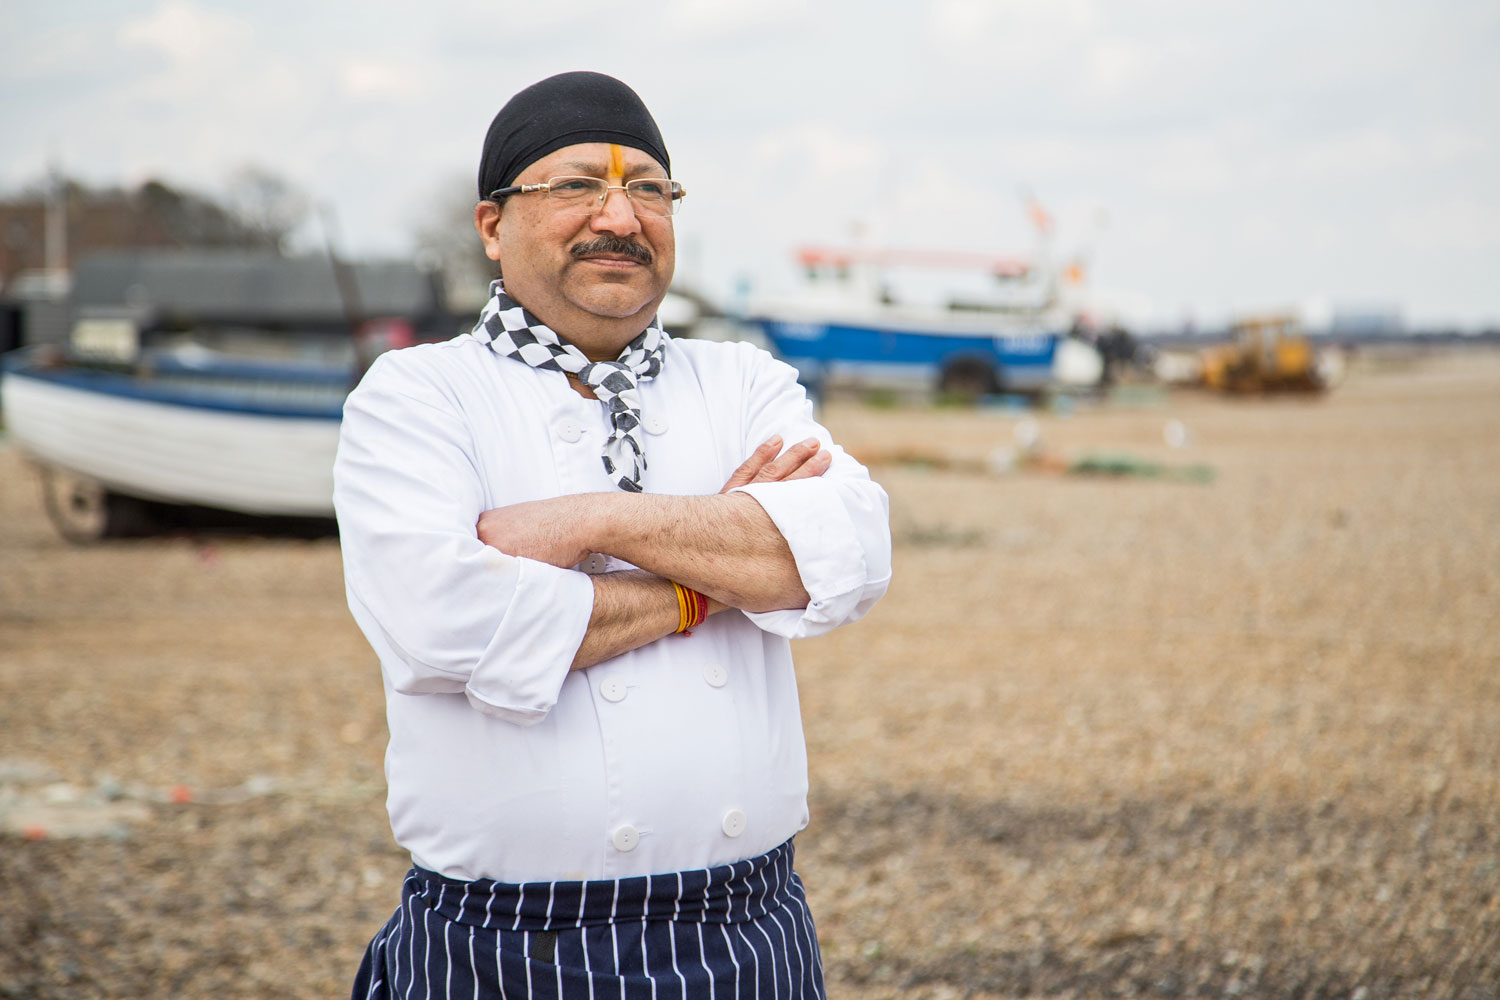 Pratap Singh Rawat, Head Chef at the new Sea Spice restaurant at the White Lion